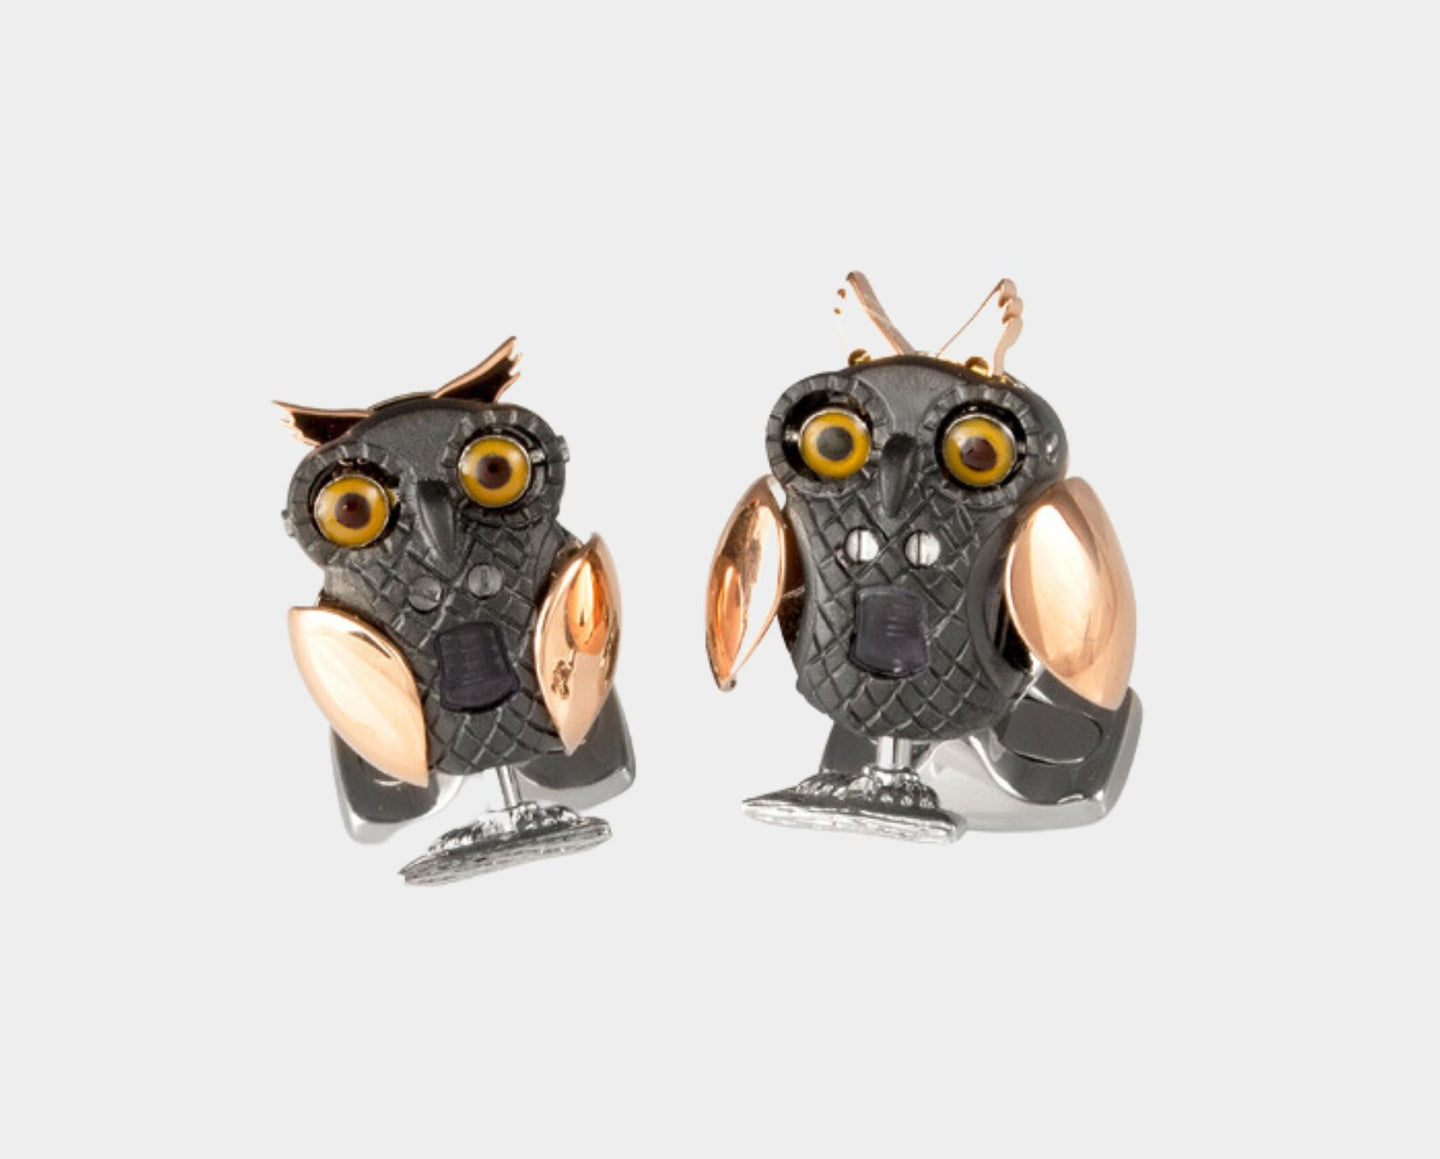 Moving Owl Cufflinks